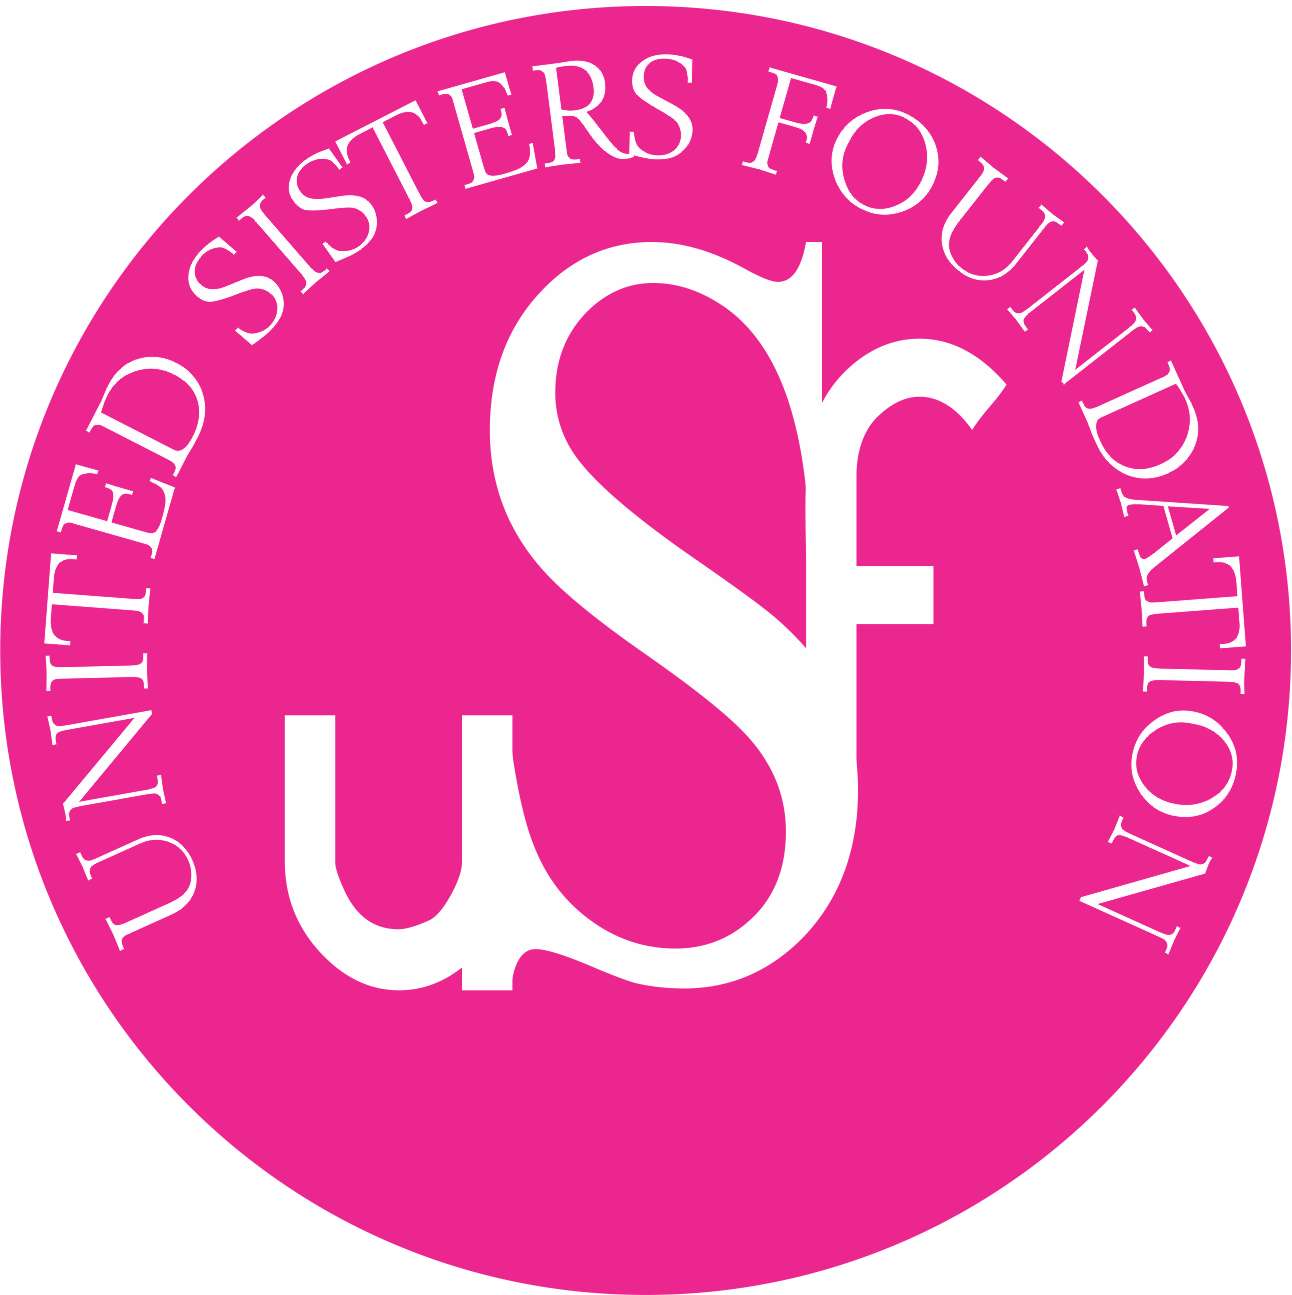 United Sisters Foundation logo